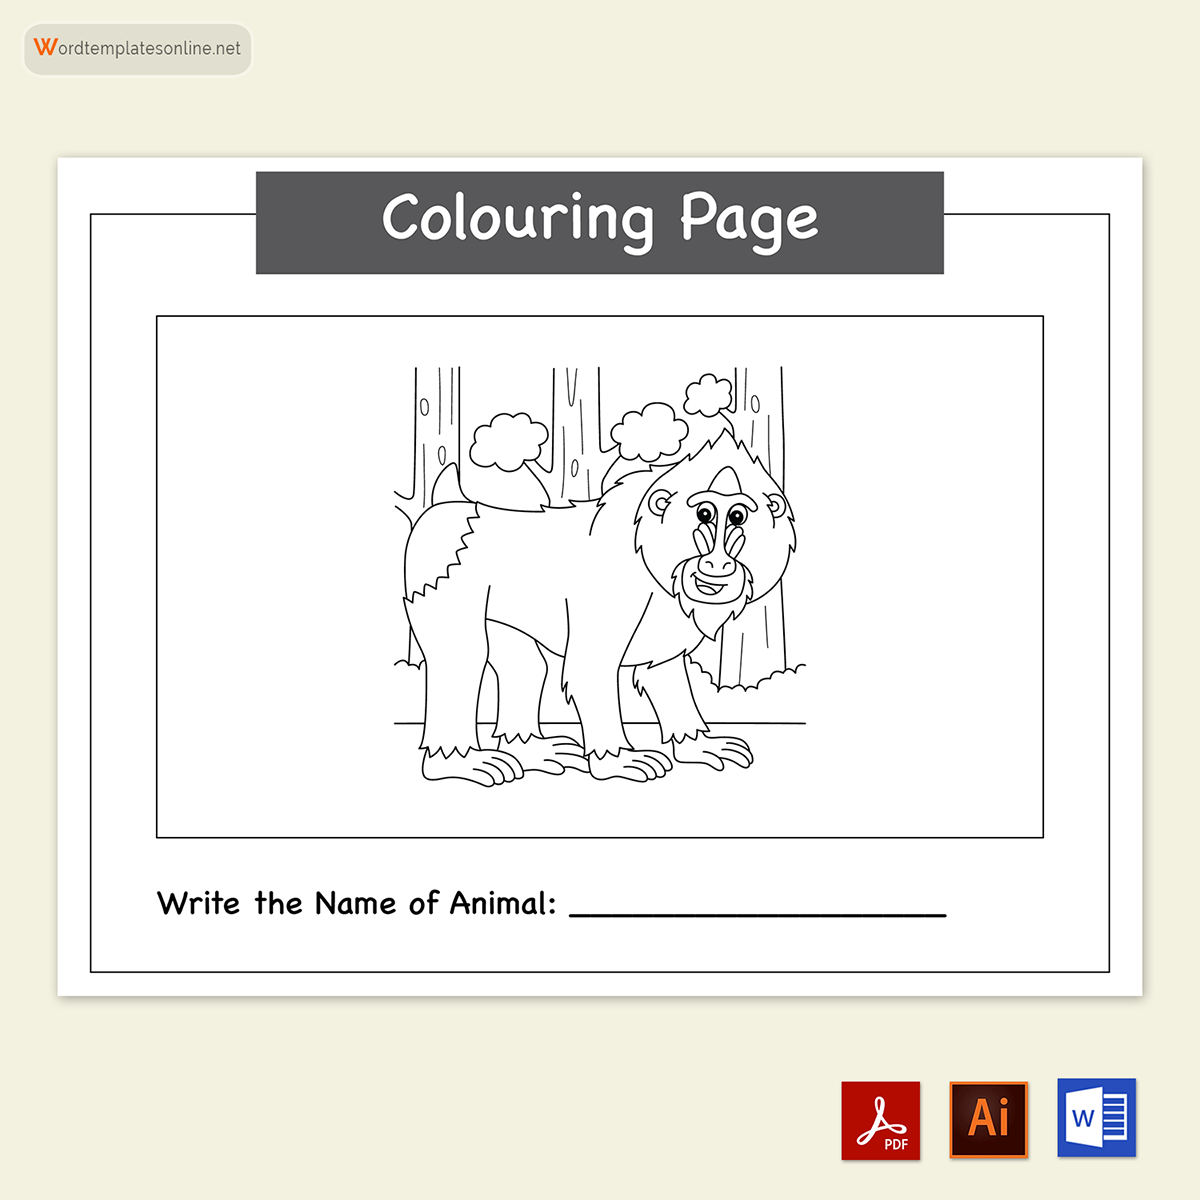 Preschool coloring pages pdf 03